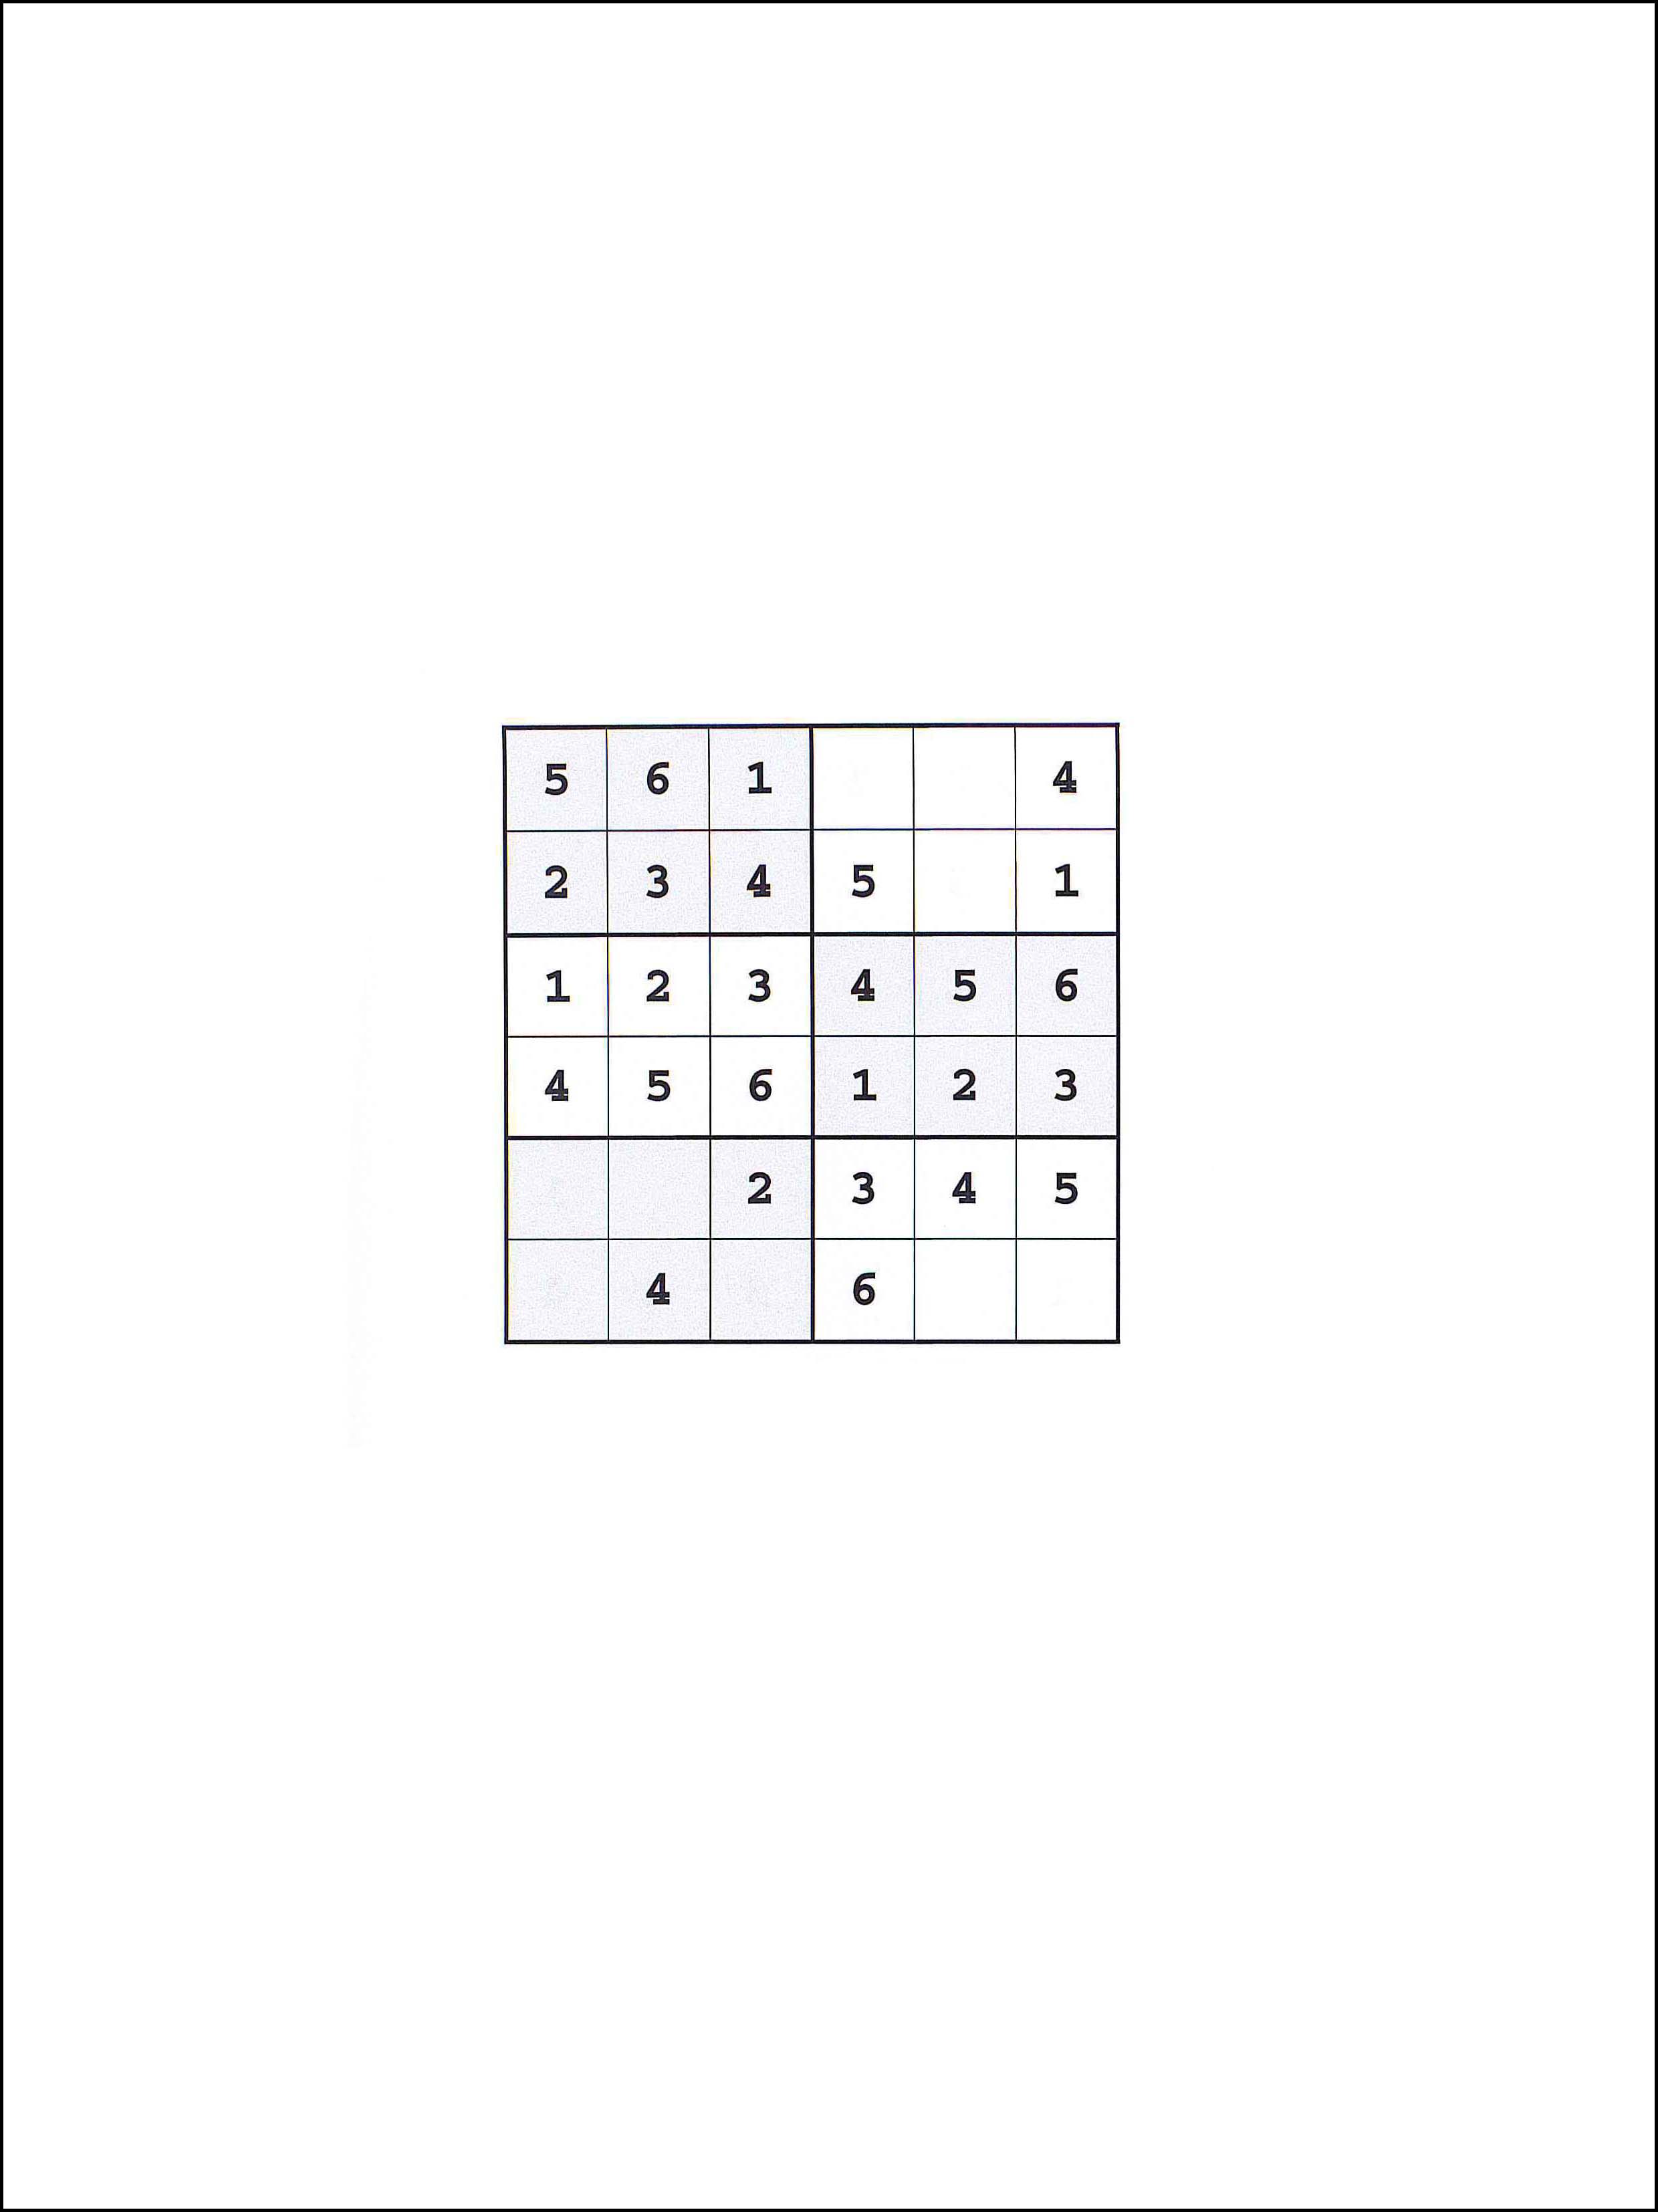 6x6 सुडोकु 1